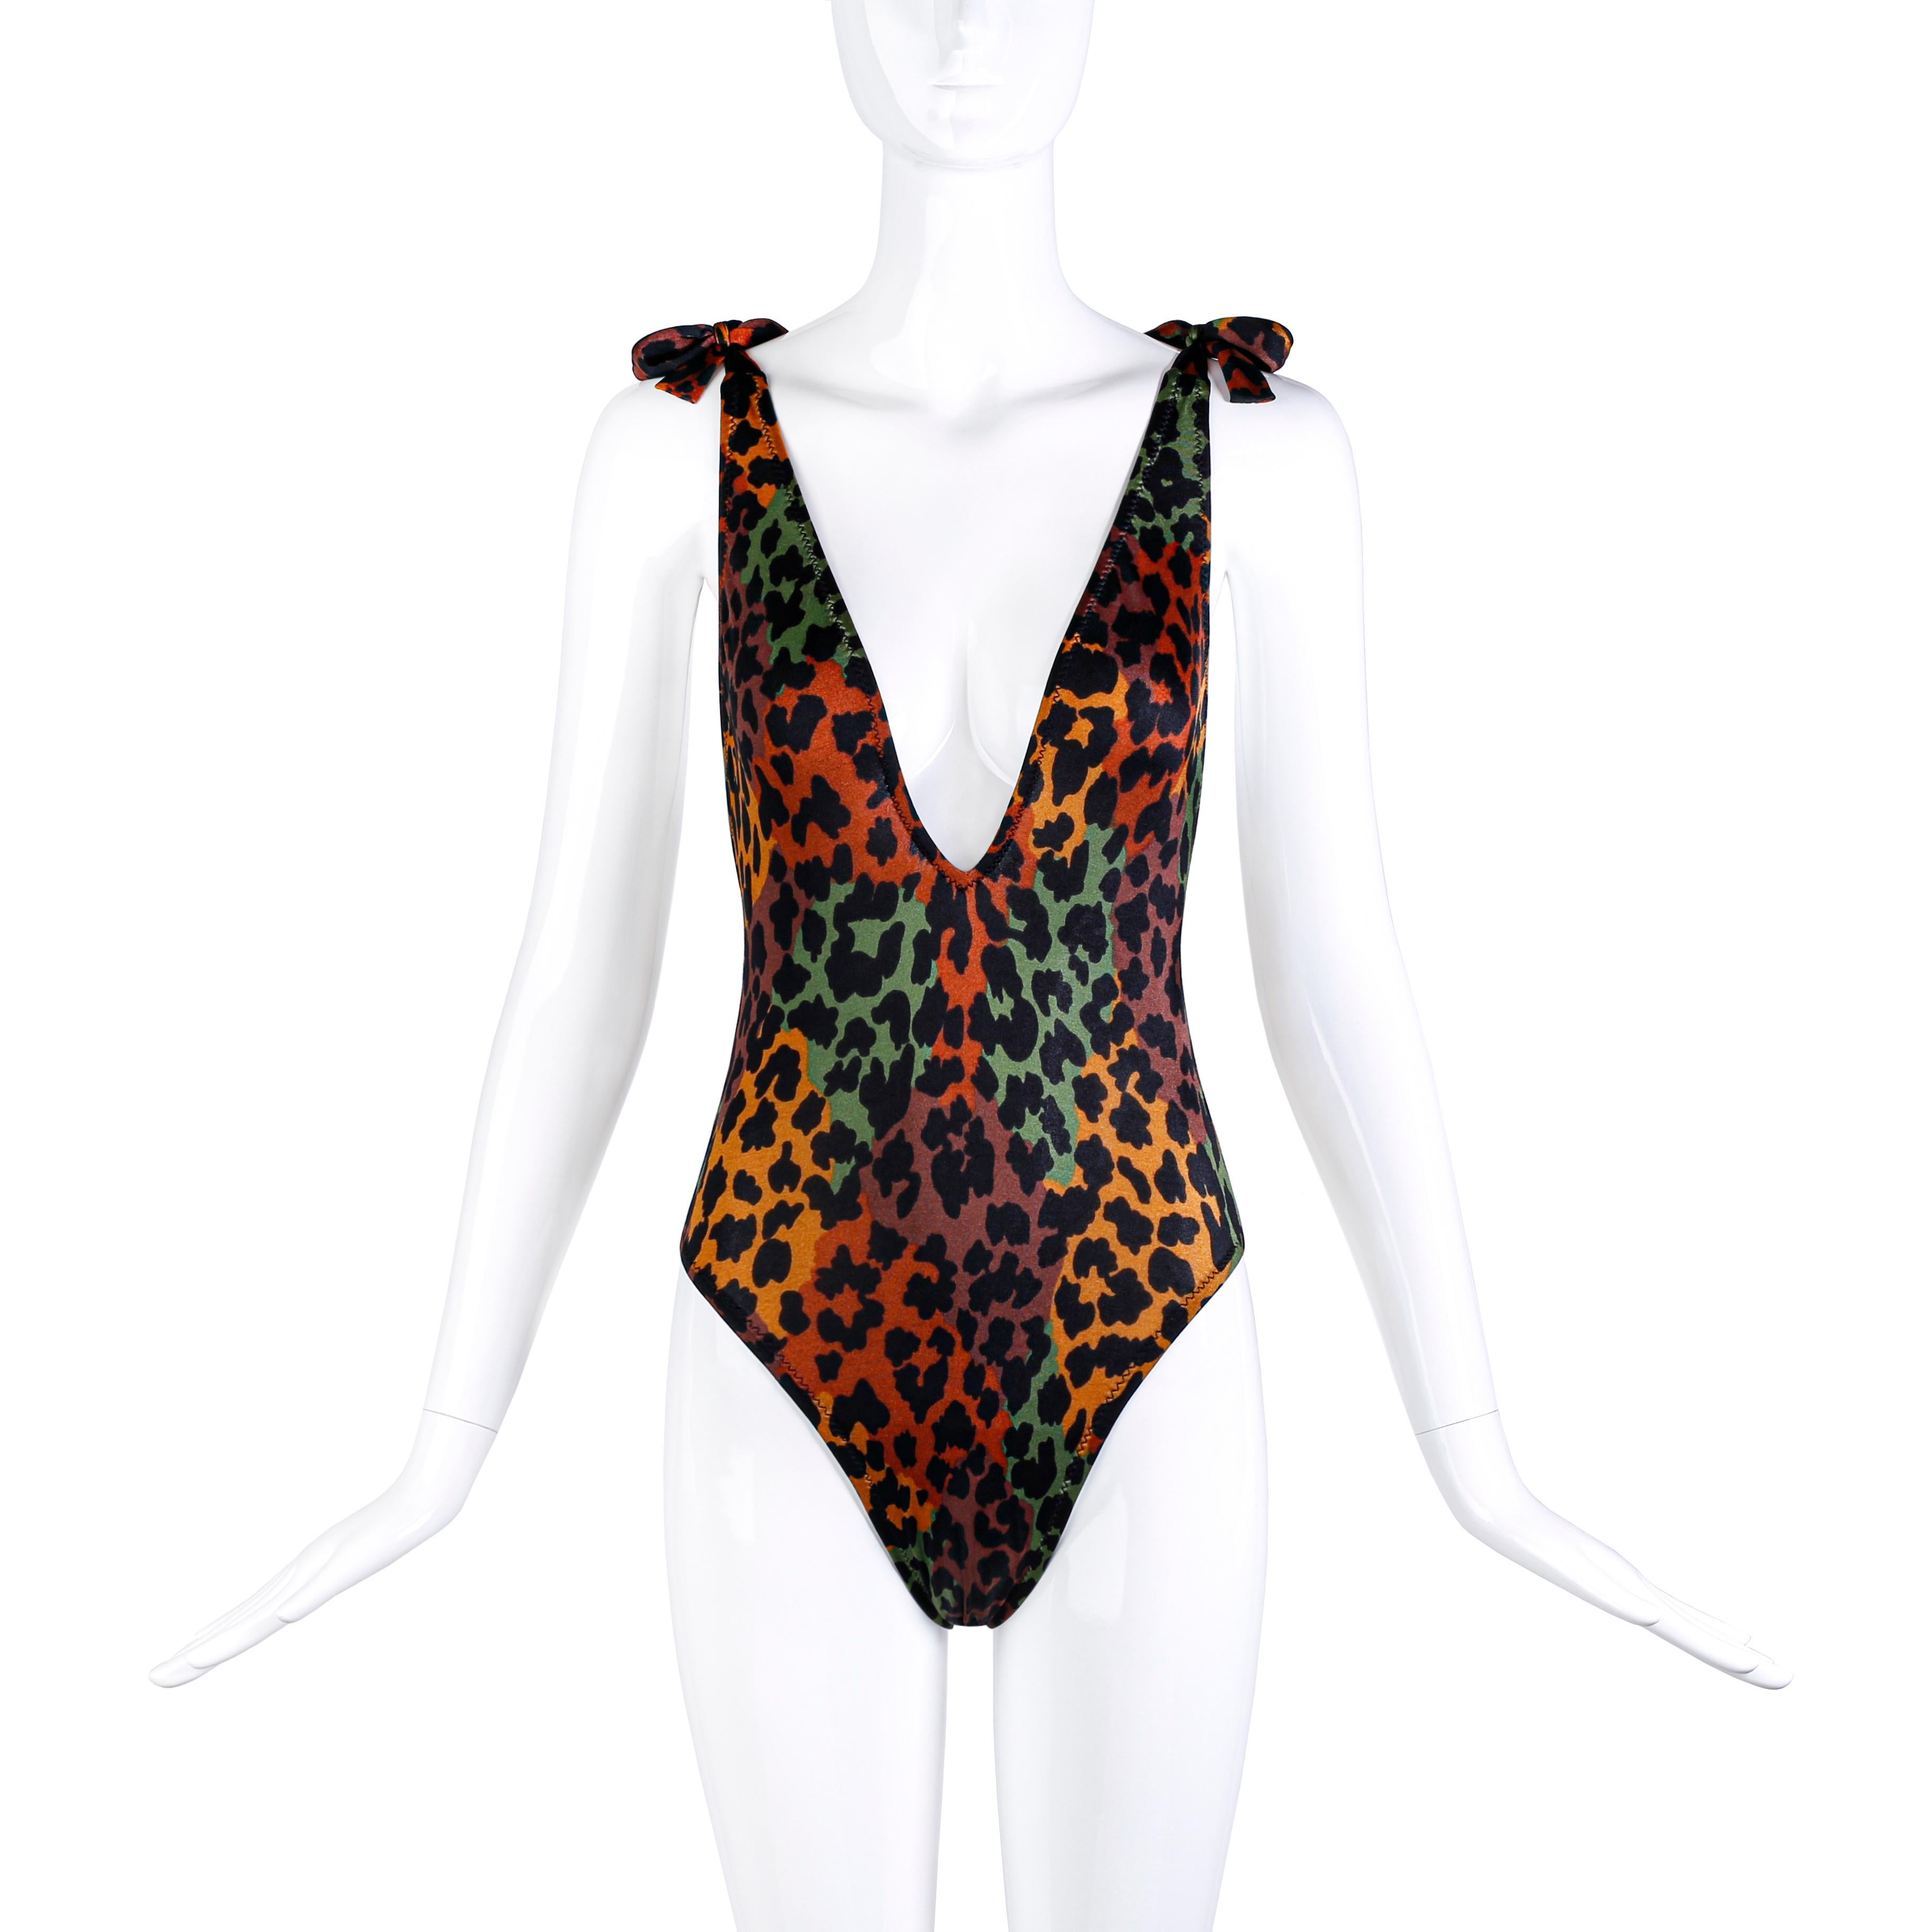 Vintage Yves Saint Laurent leopard print stretch bodysuit swimsuit. Circa 1980's. Label marked, 